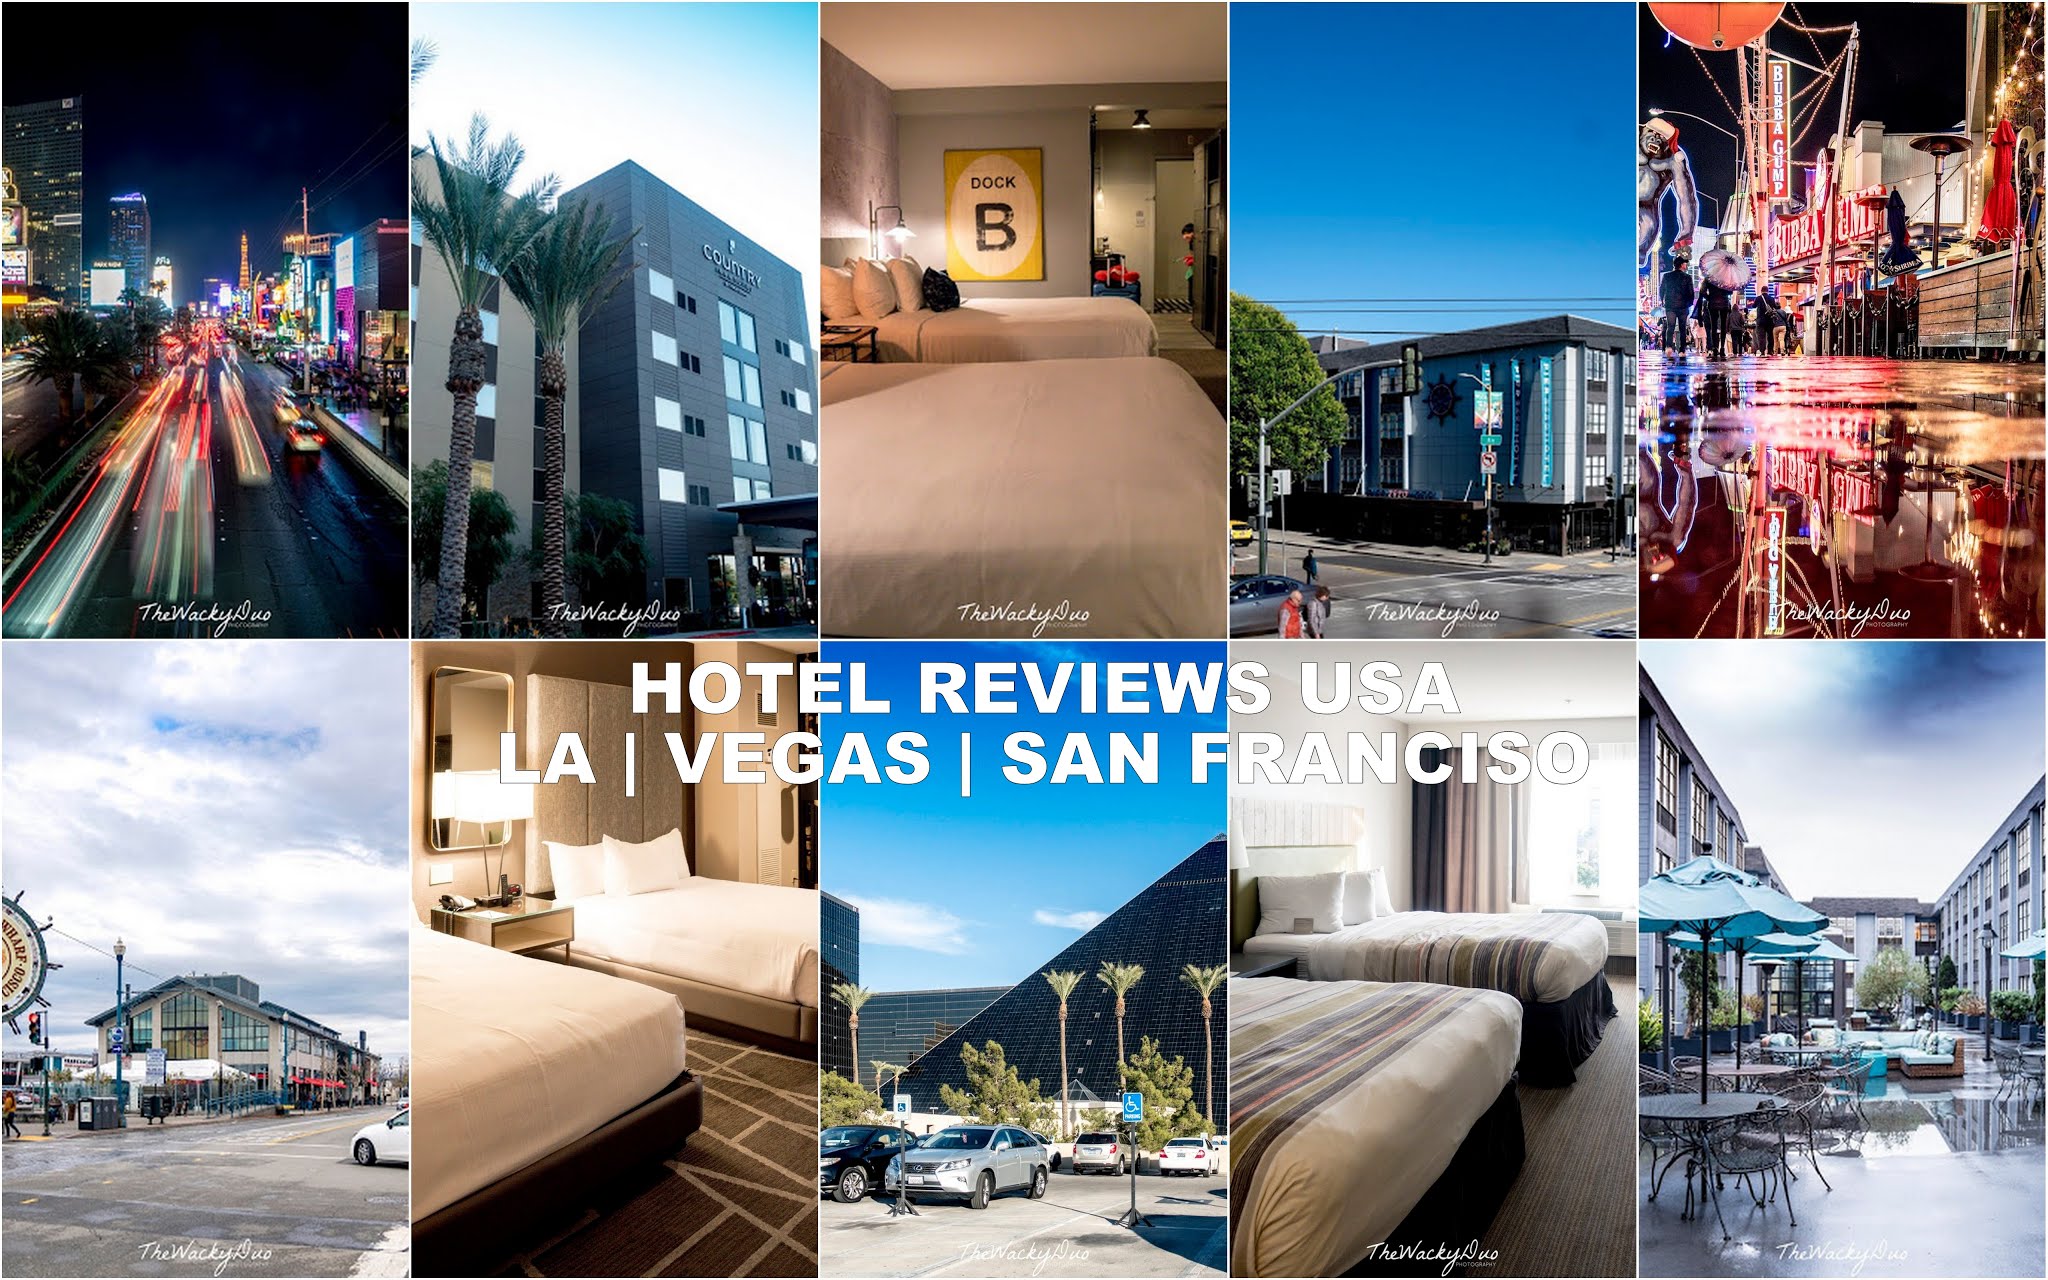 Hotels Reviews around the world : USA California, Vegas, San Francisco